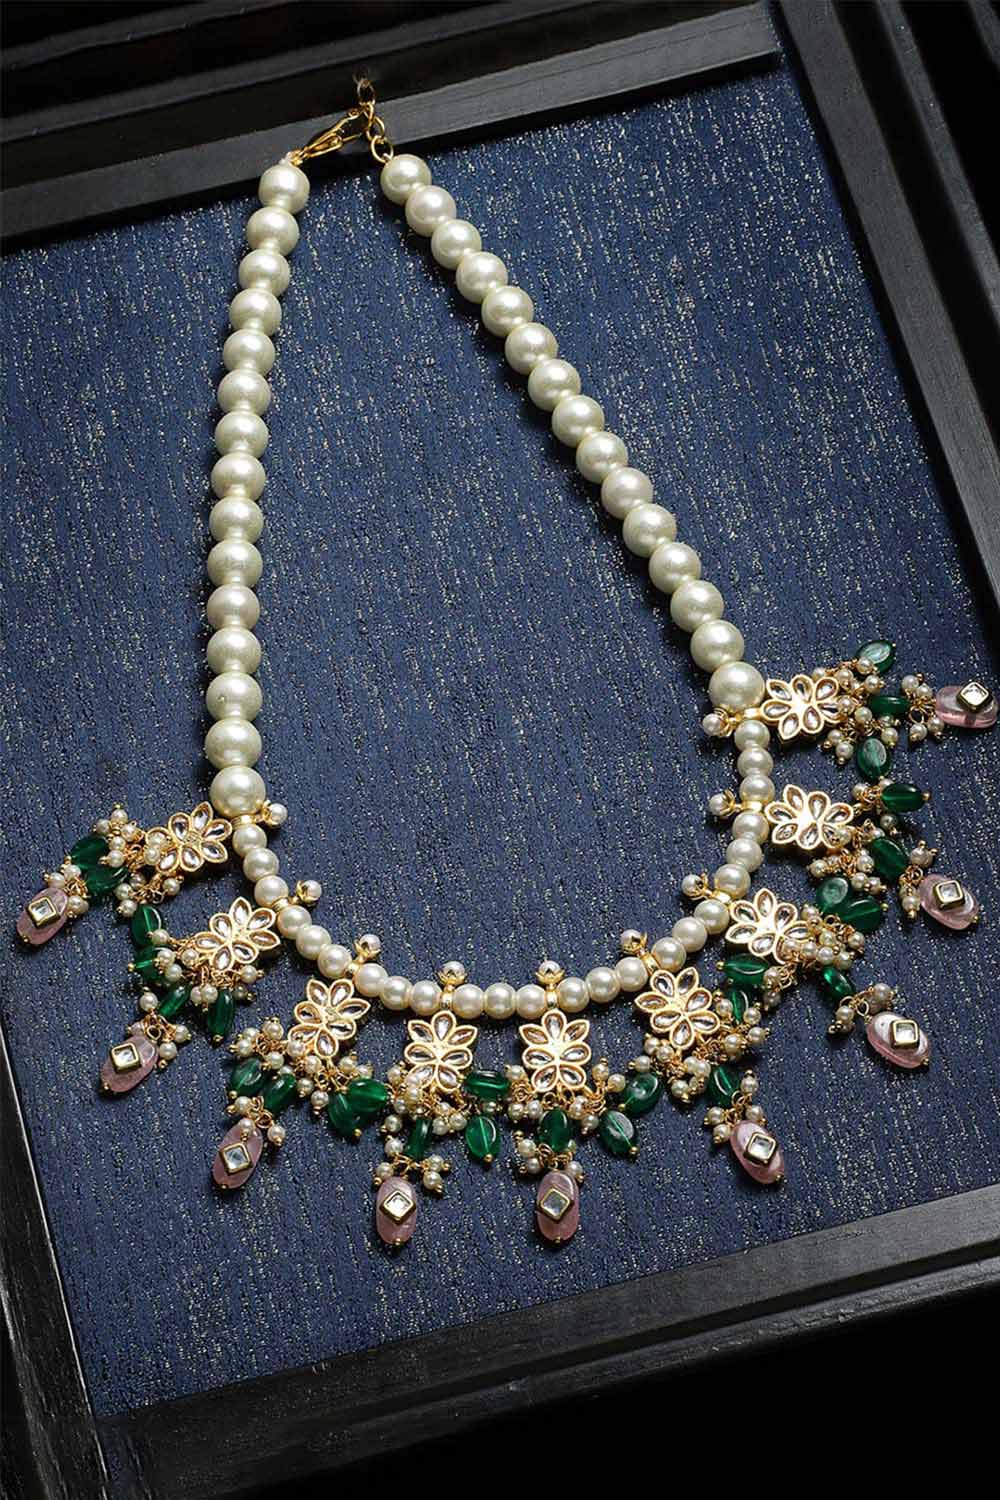 Buy Women's Sterling Silver Bead Necklace in Green - Zoom in